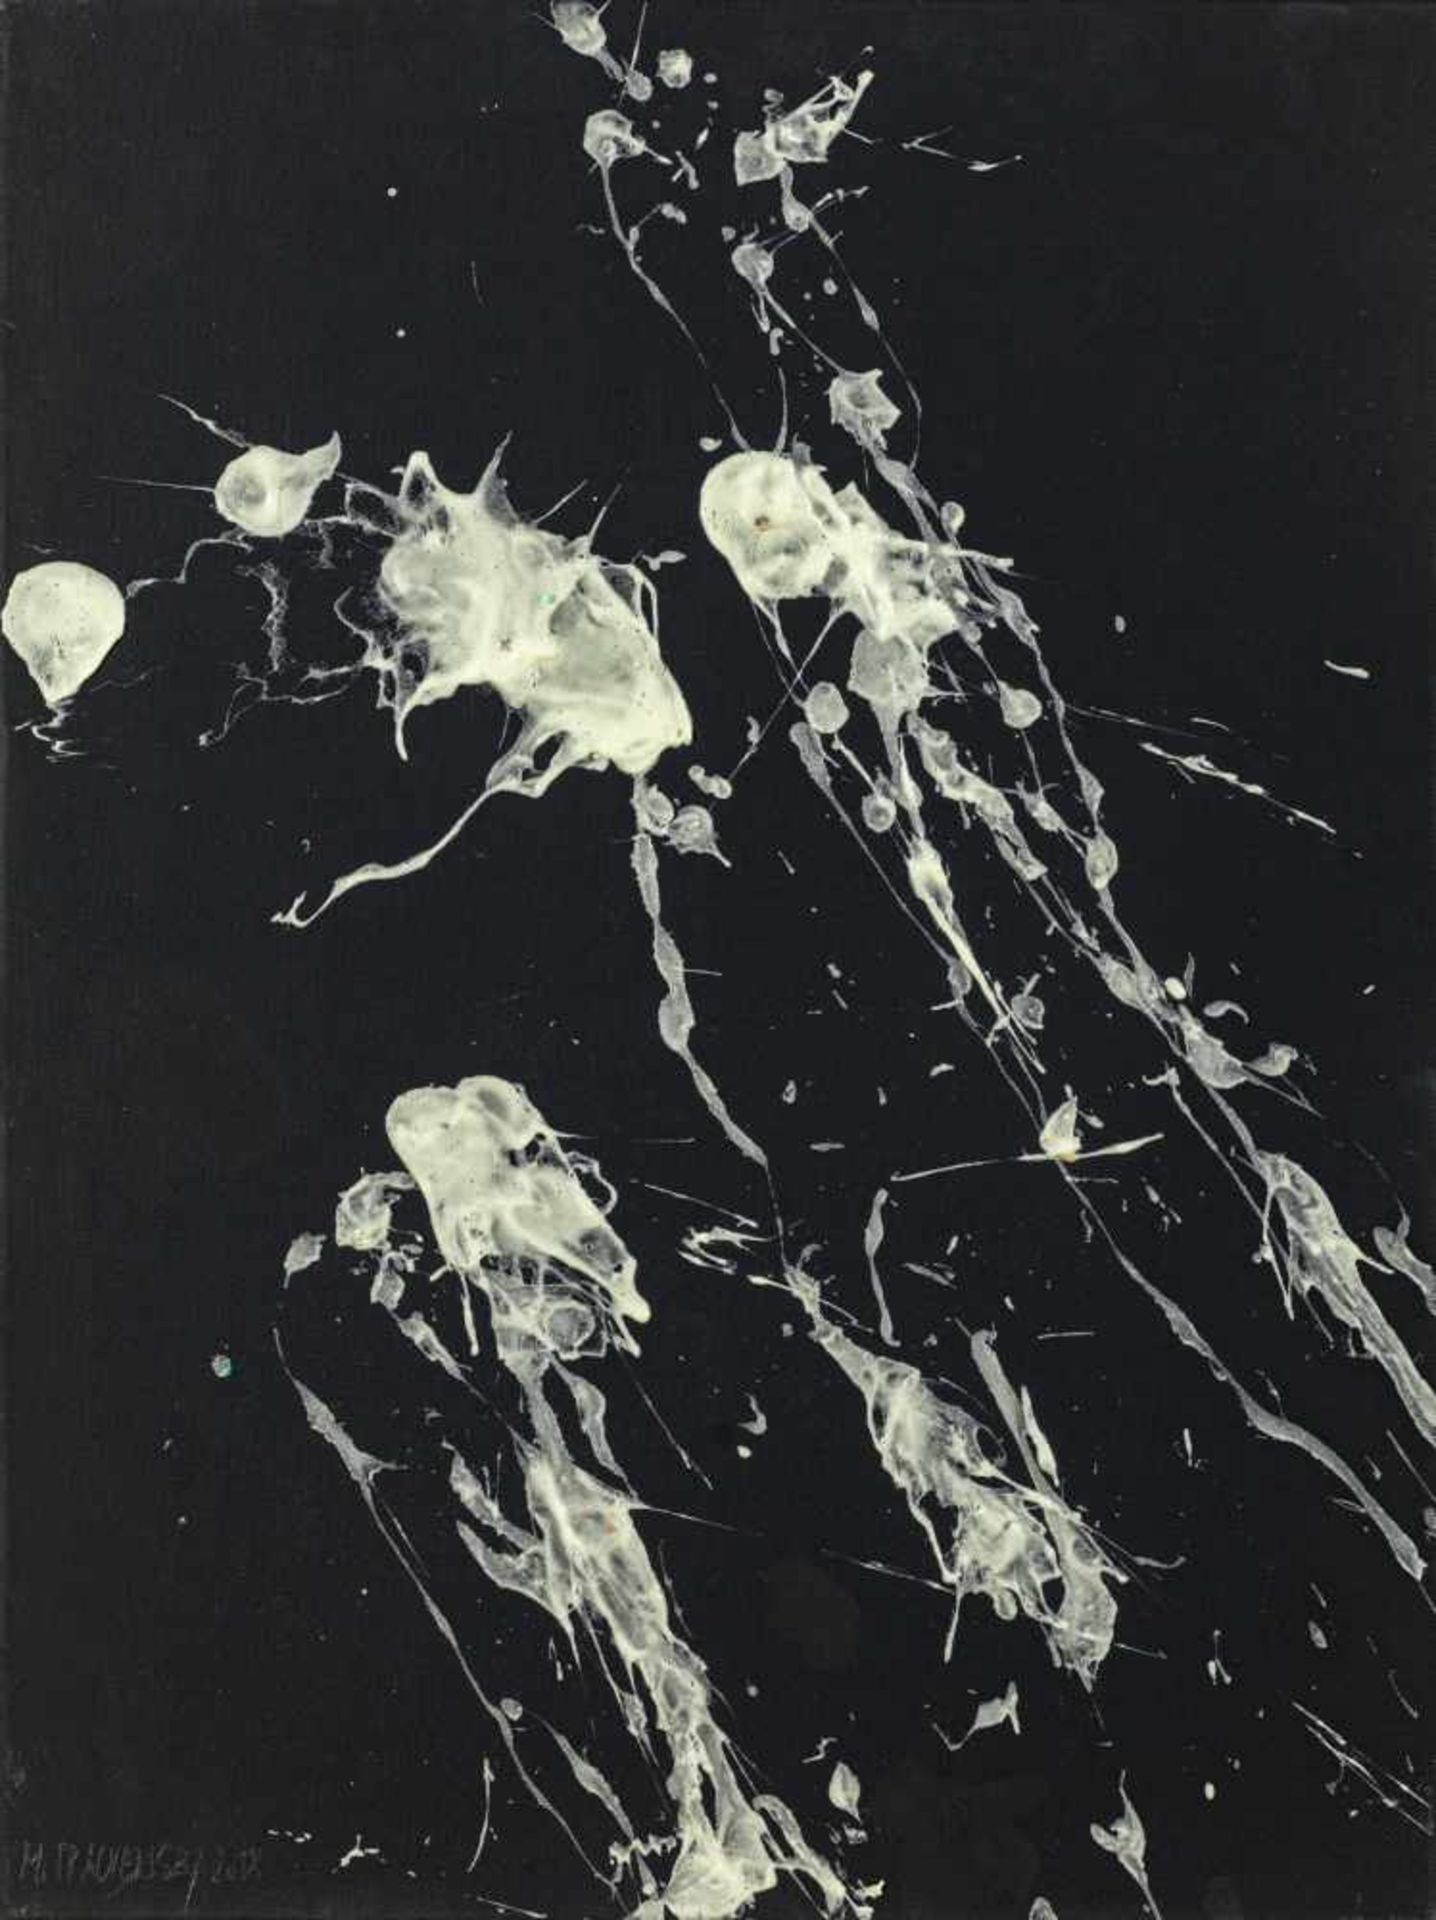 Michael PrachenskyHolzgau im Lechtal 1944 *Luminophor (Triptychon/triptych)Acryl auf schwarzer